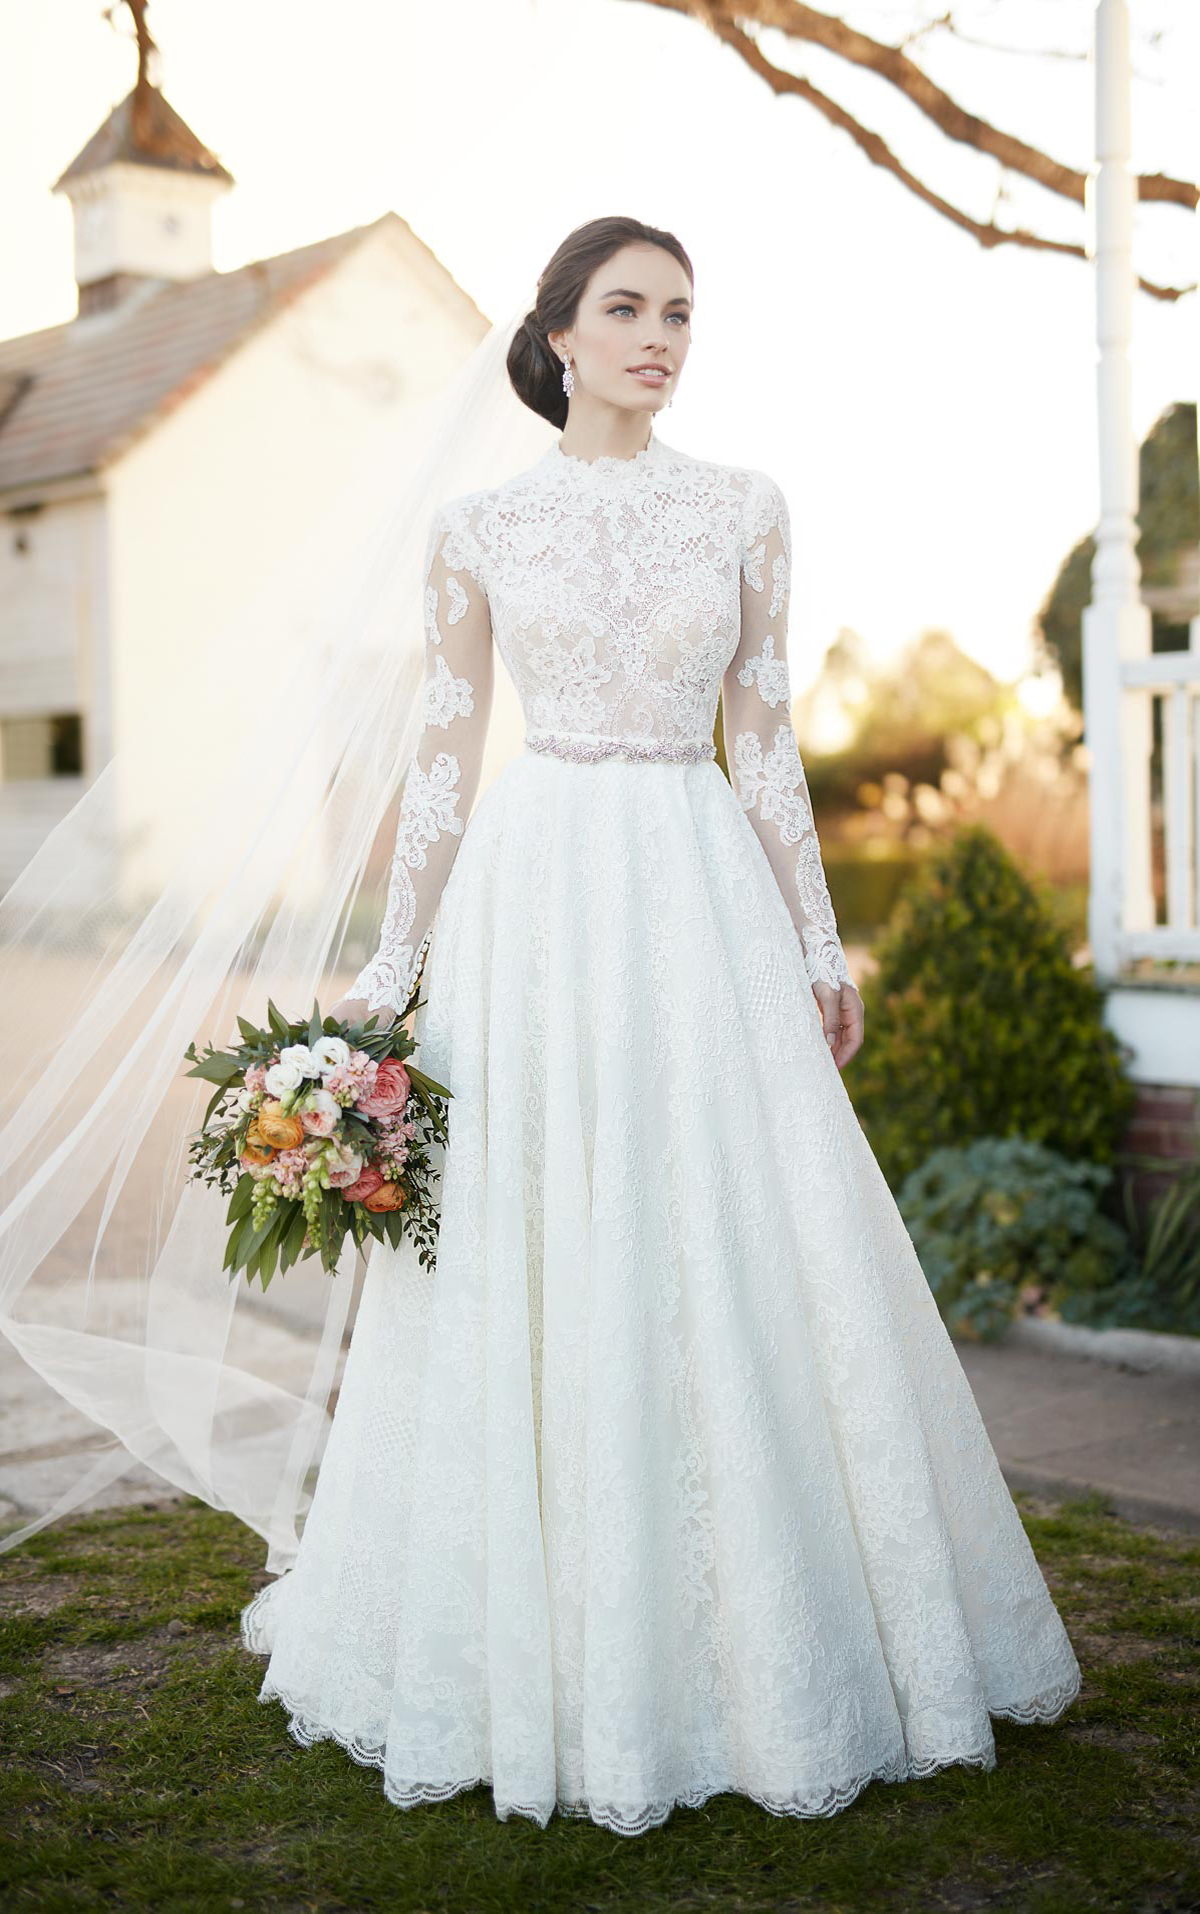 Wedding dress by Martina Liana